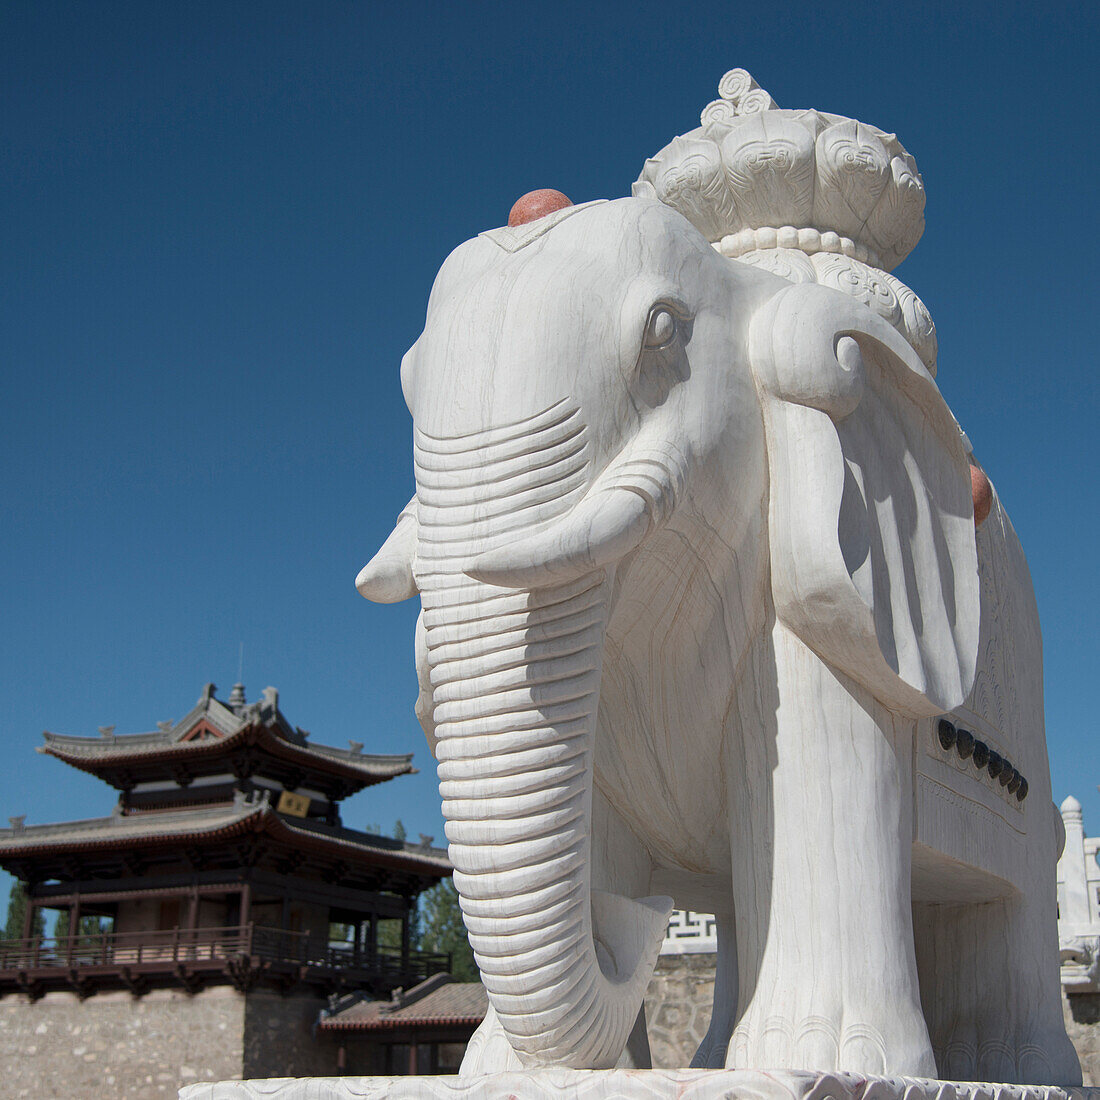 A white carved elephant statue against blue sky